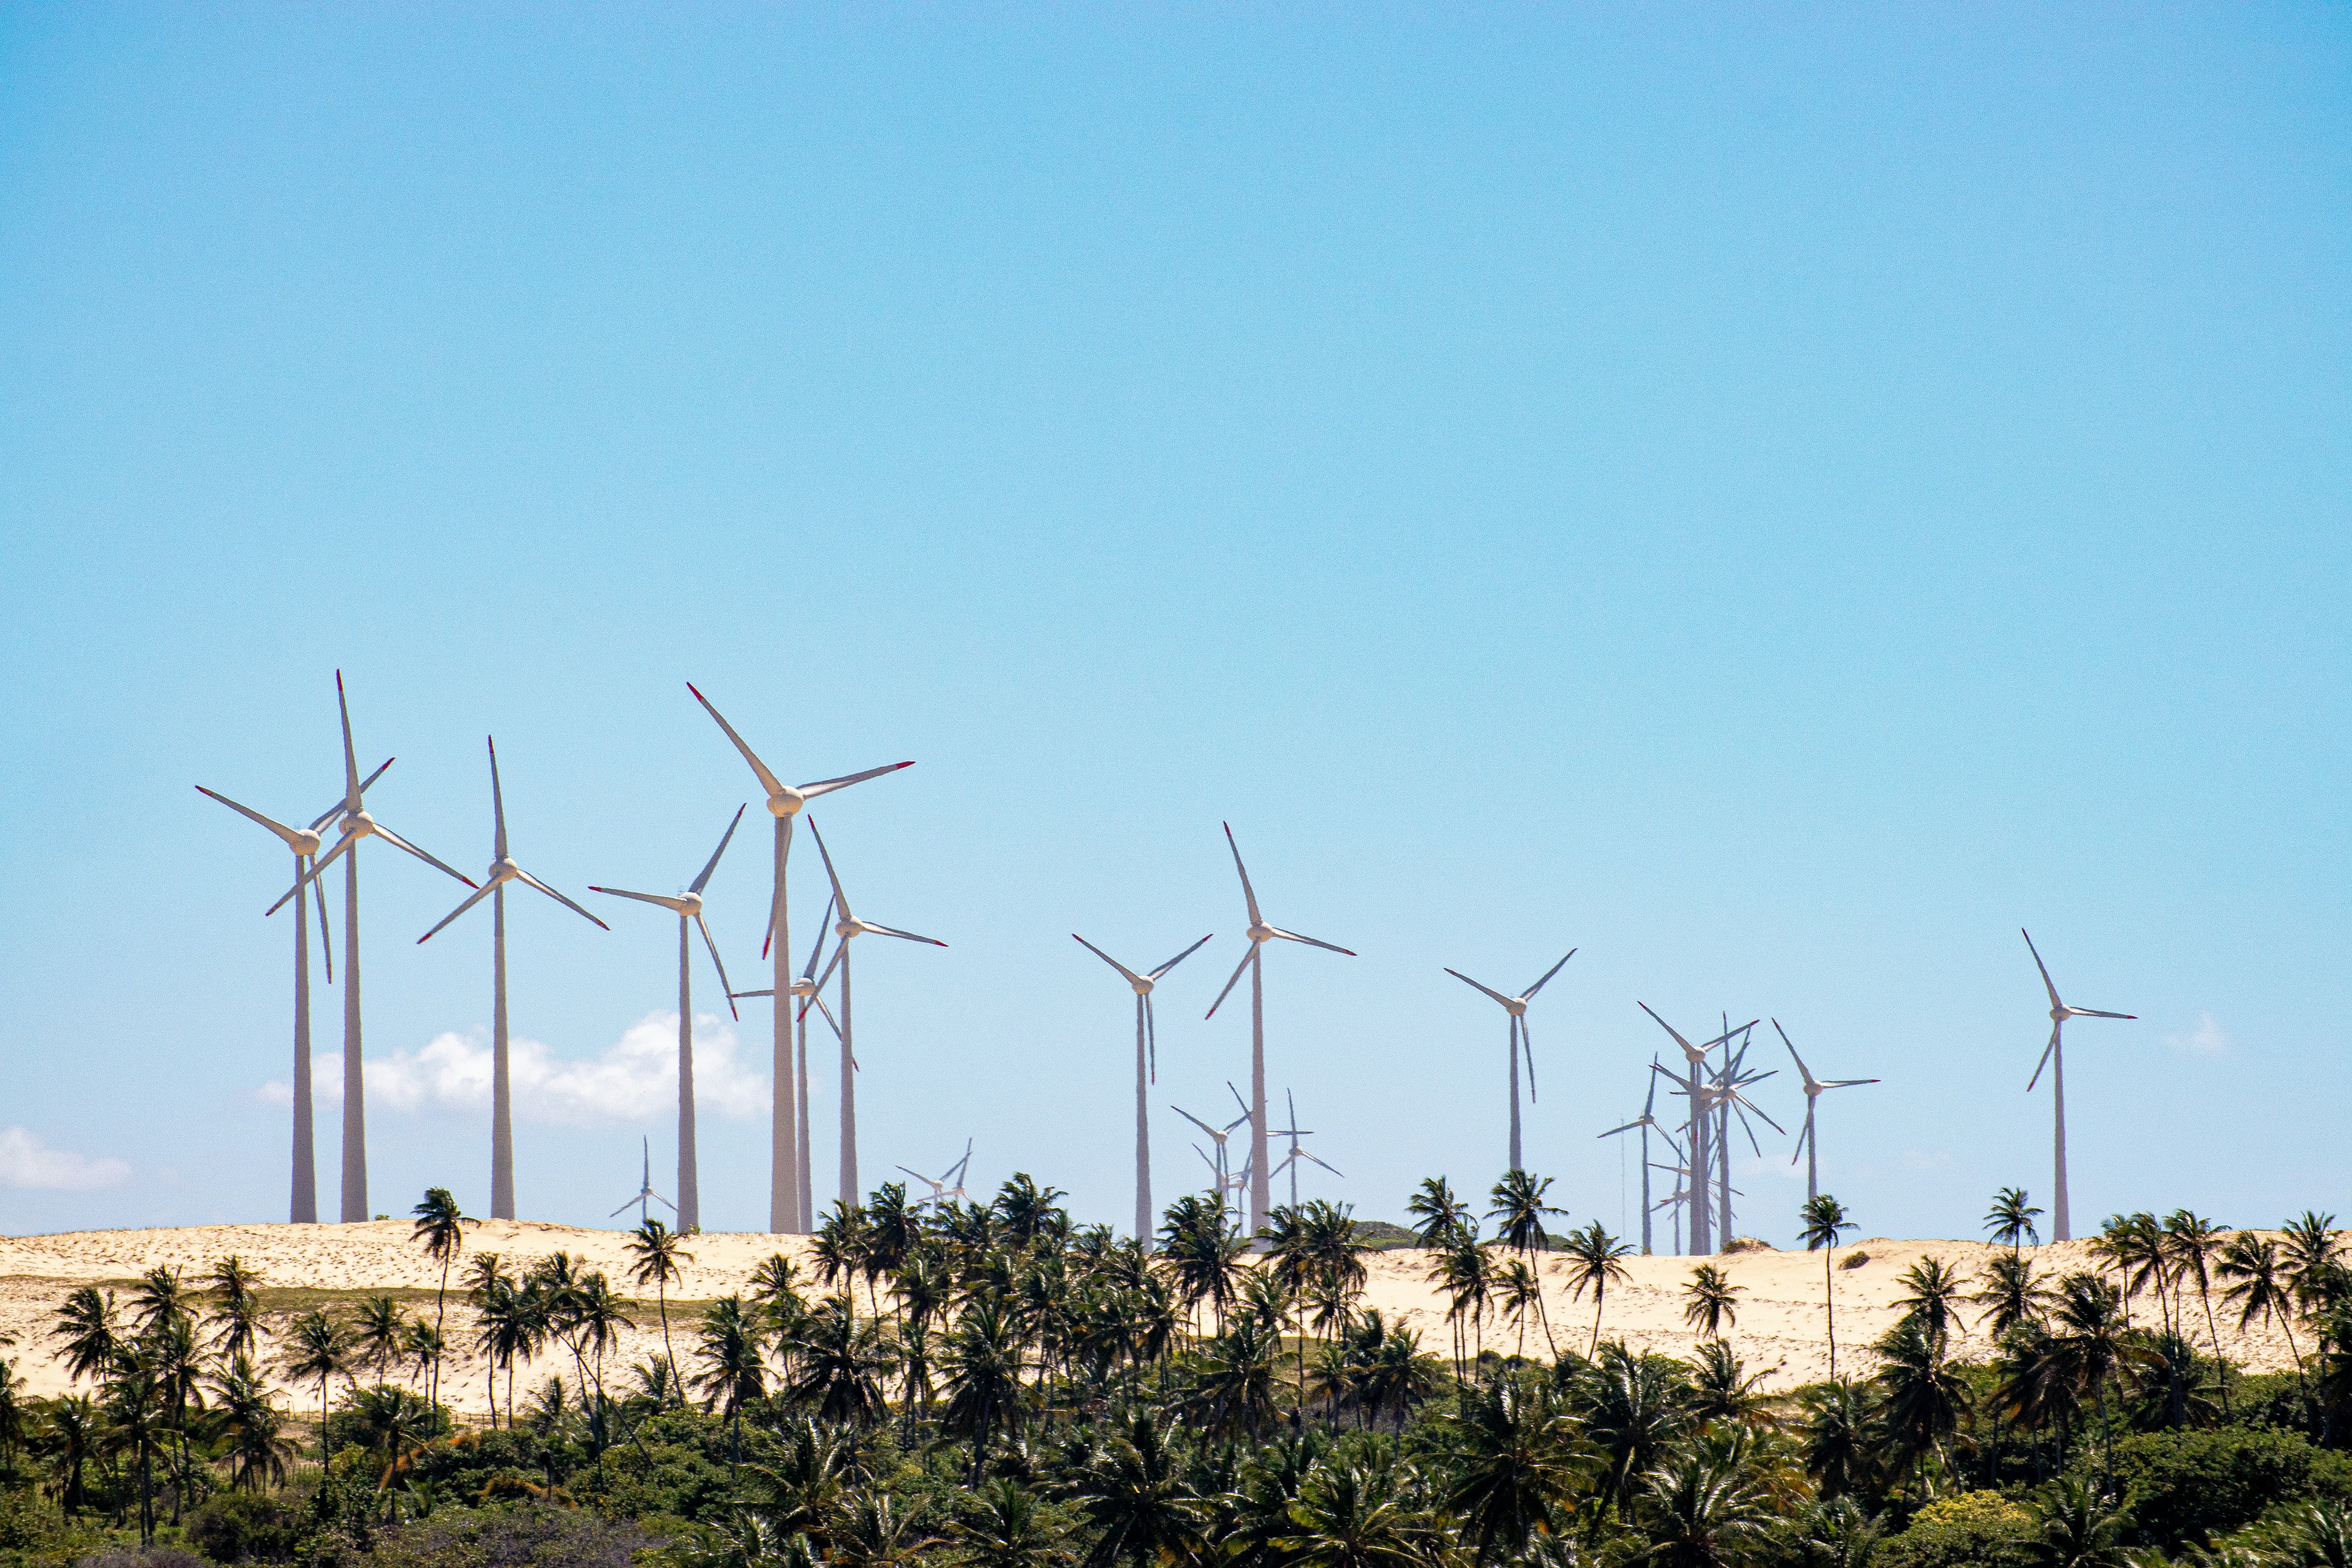 wind turbines on green grass field under blue sky during daytime